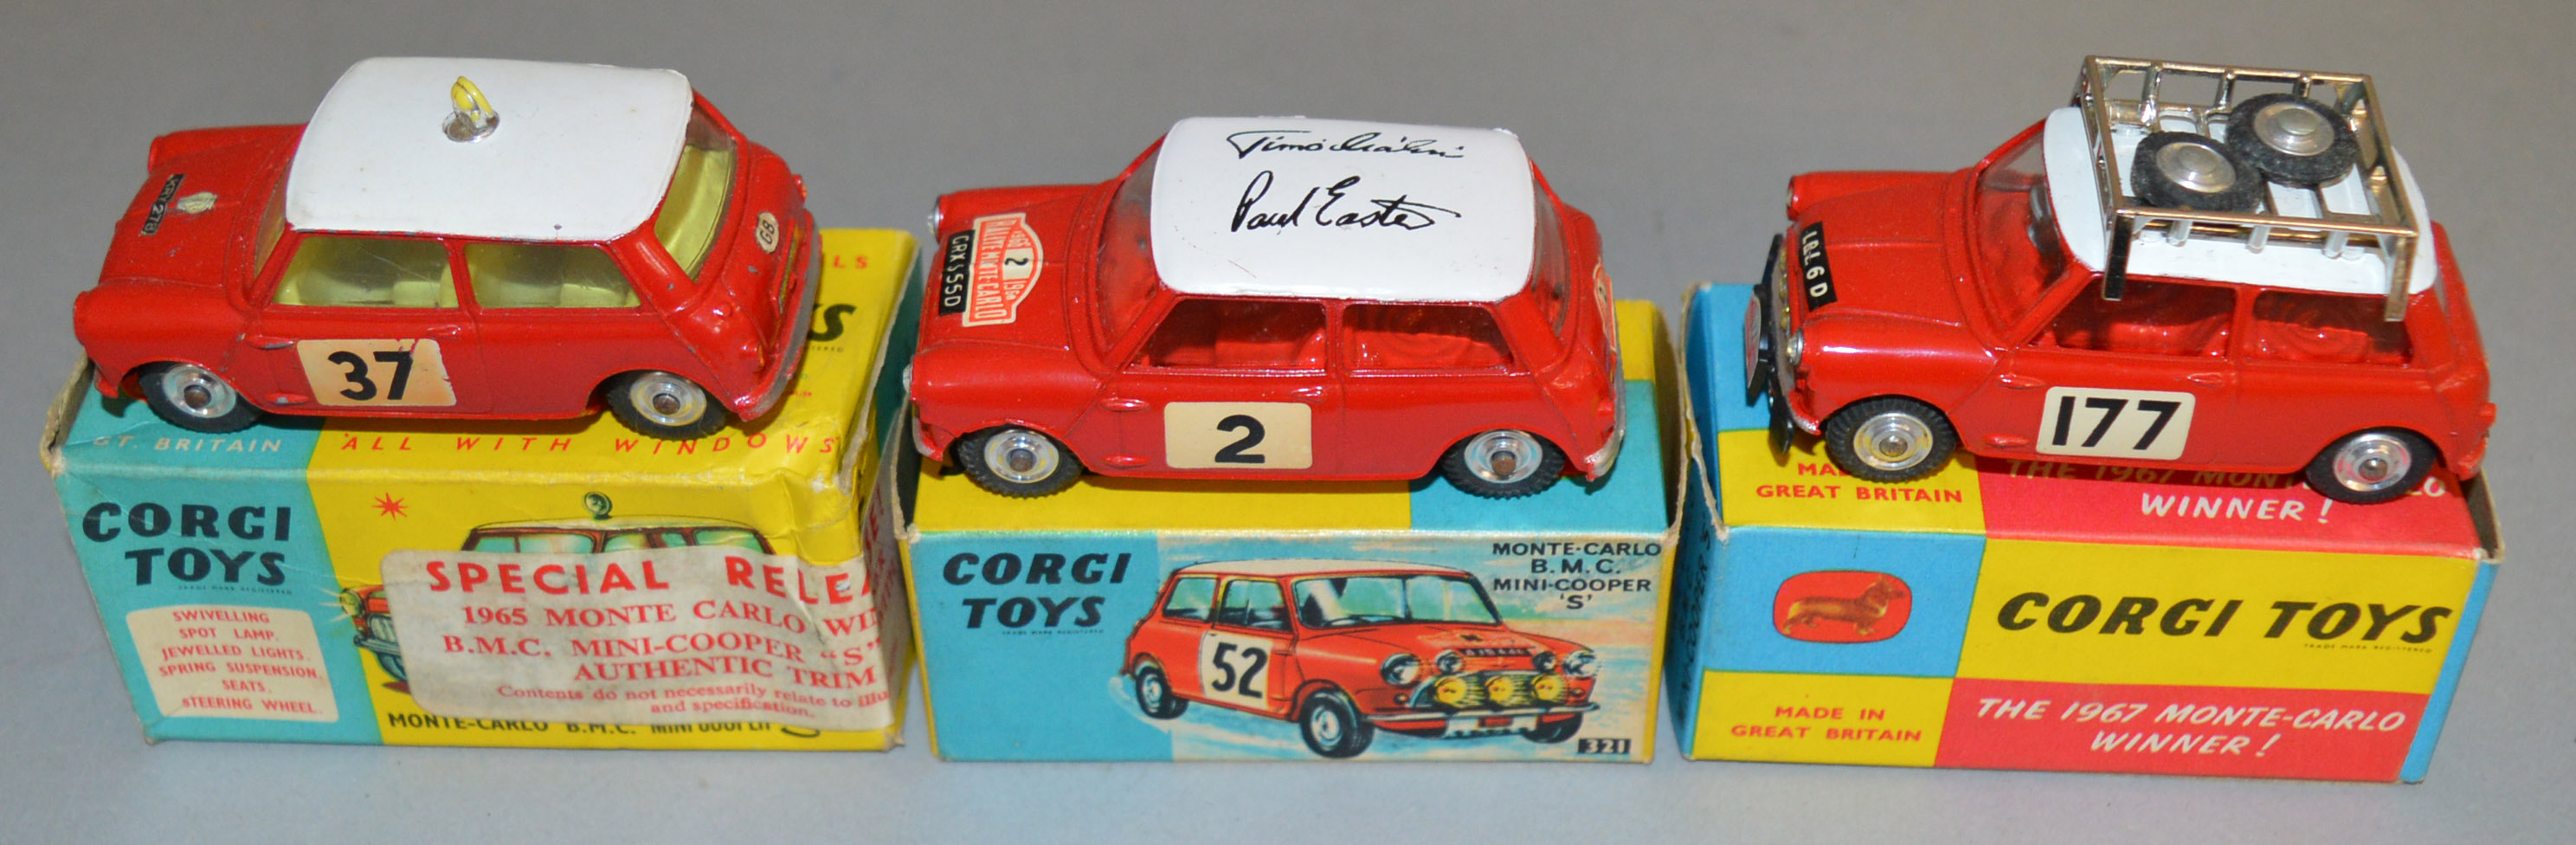 3 Corgi Toys BMC Mini Cooper 'S' diecast Rally Car models including 321 1965 Monte Carlo Rally RN '